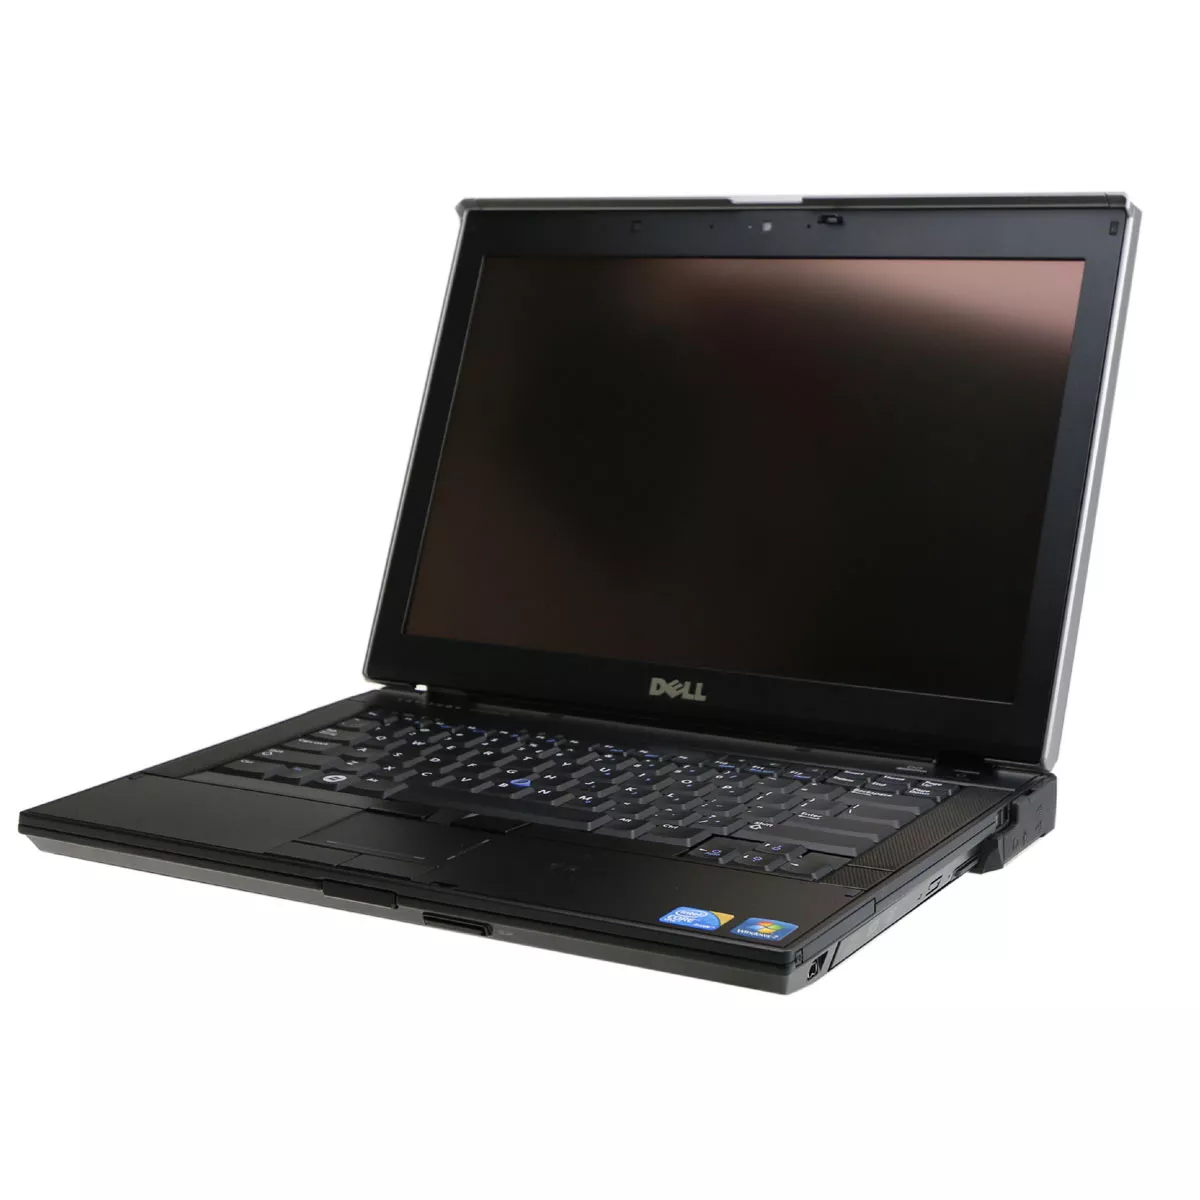 Outdoor Notebook Dell Latitude E6410 ATG Core i5 560M 2,67 GHz Webcam B-Ware